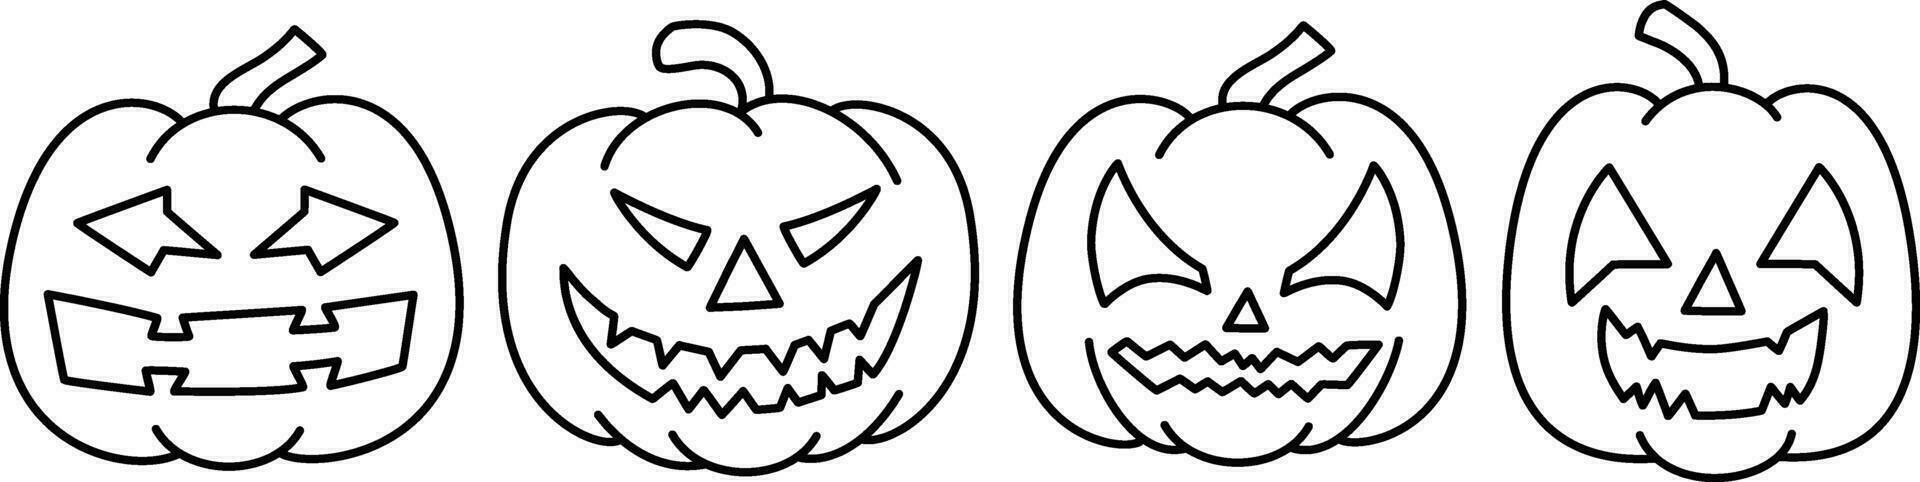 Halloween pumpkin outline. Halloween pumpkin doodle icon with a face Pro Vector